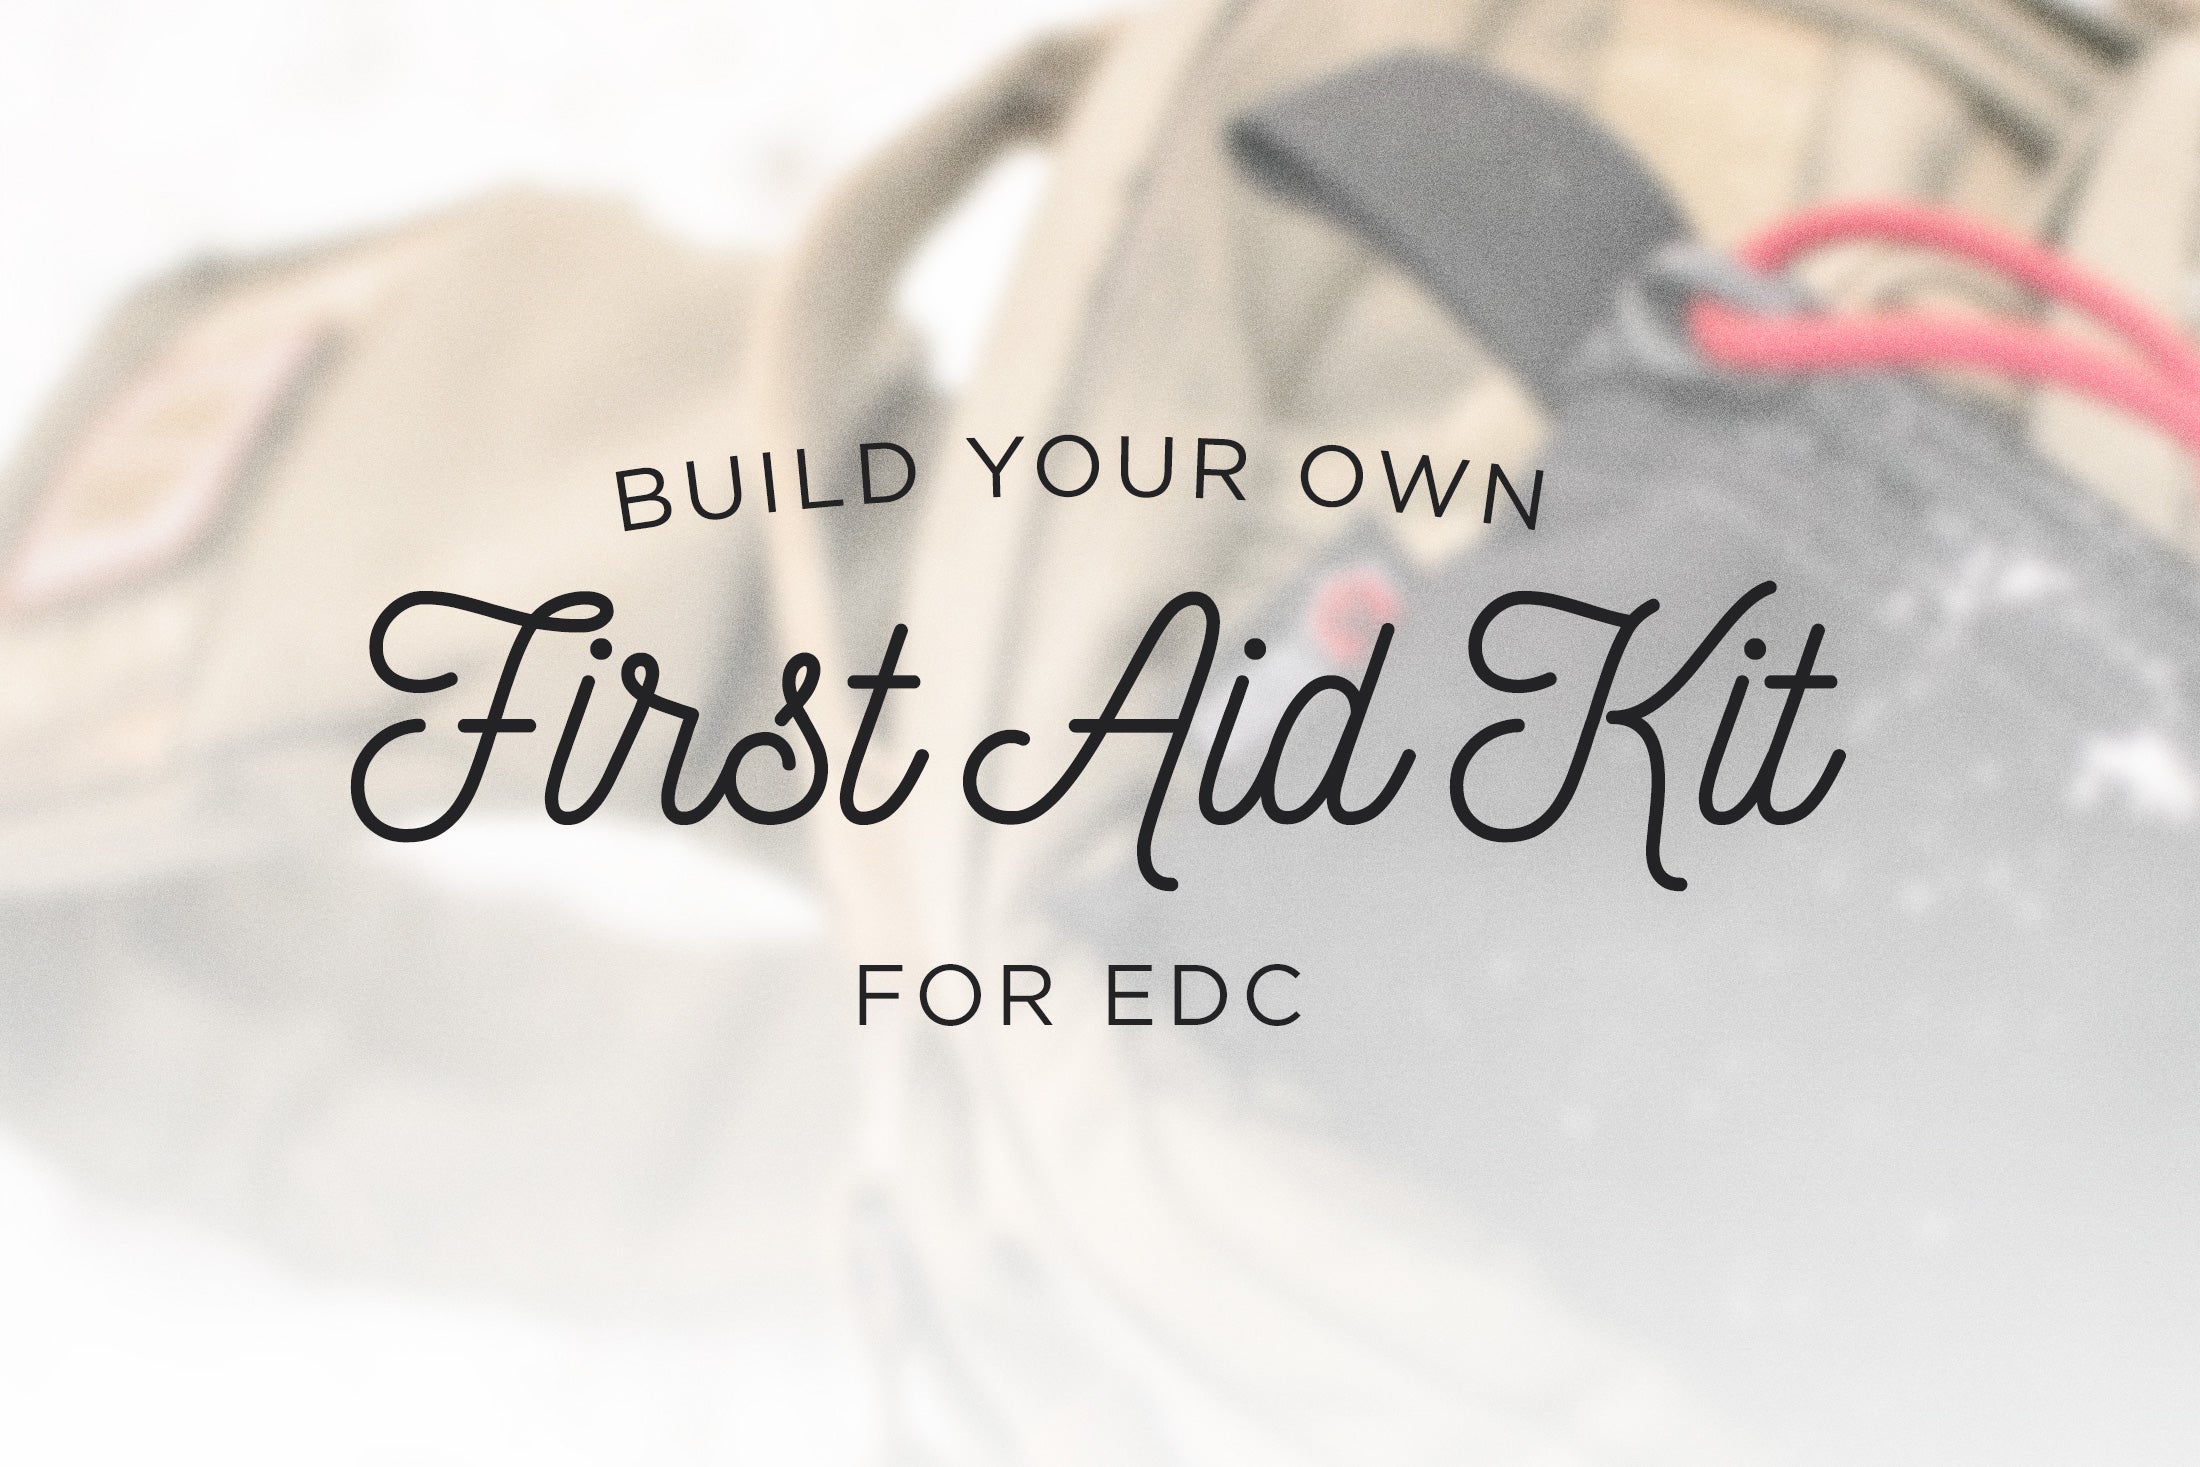 DIY EDC First Aid Kit